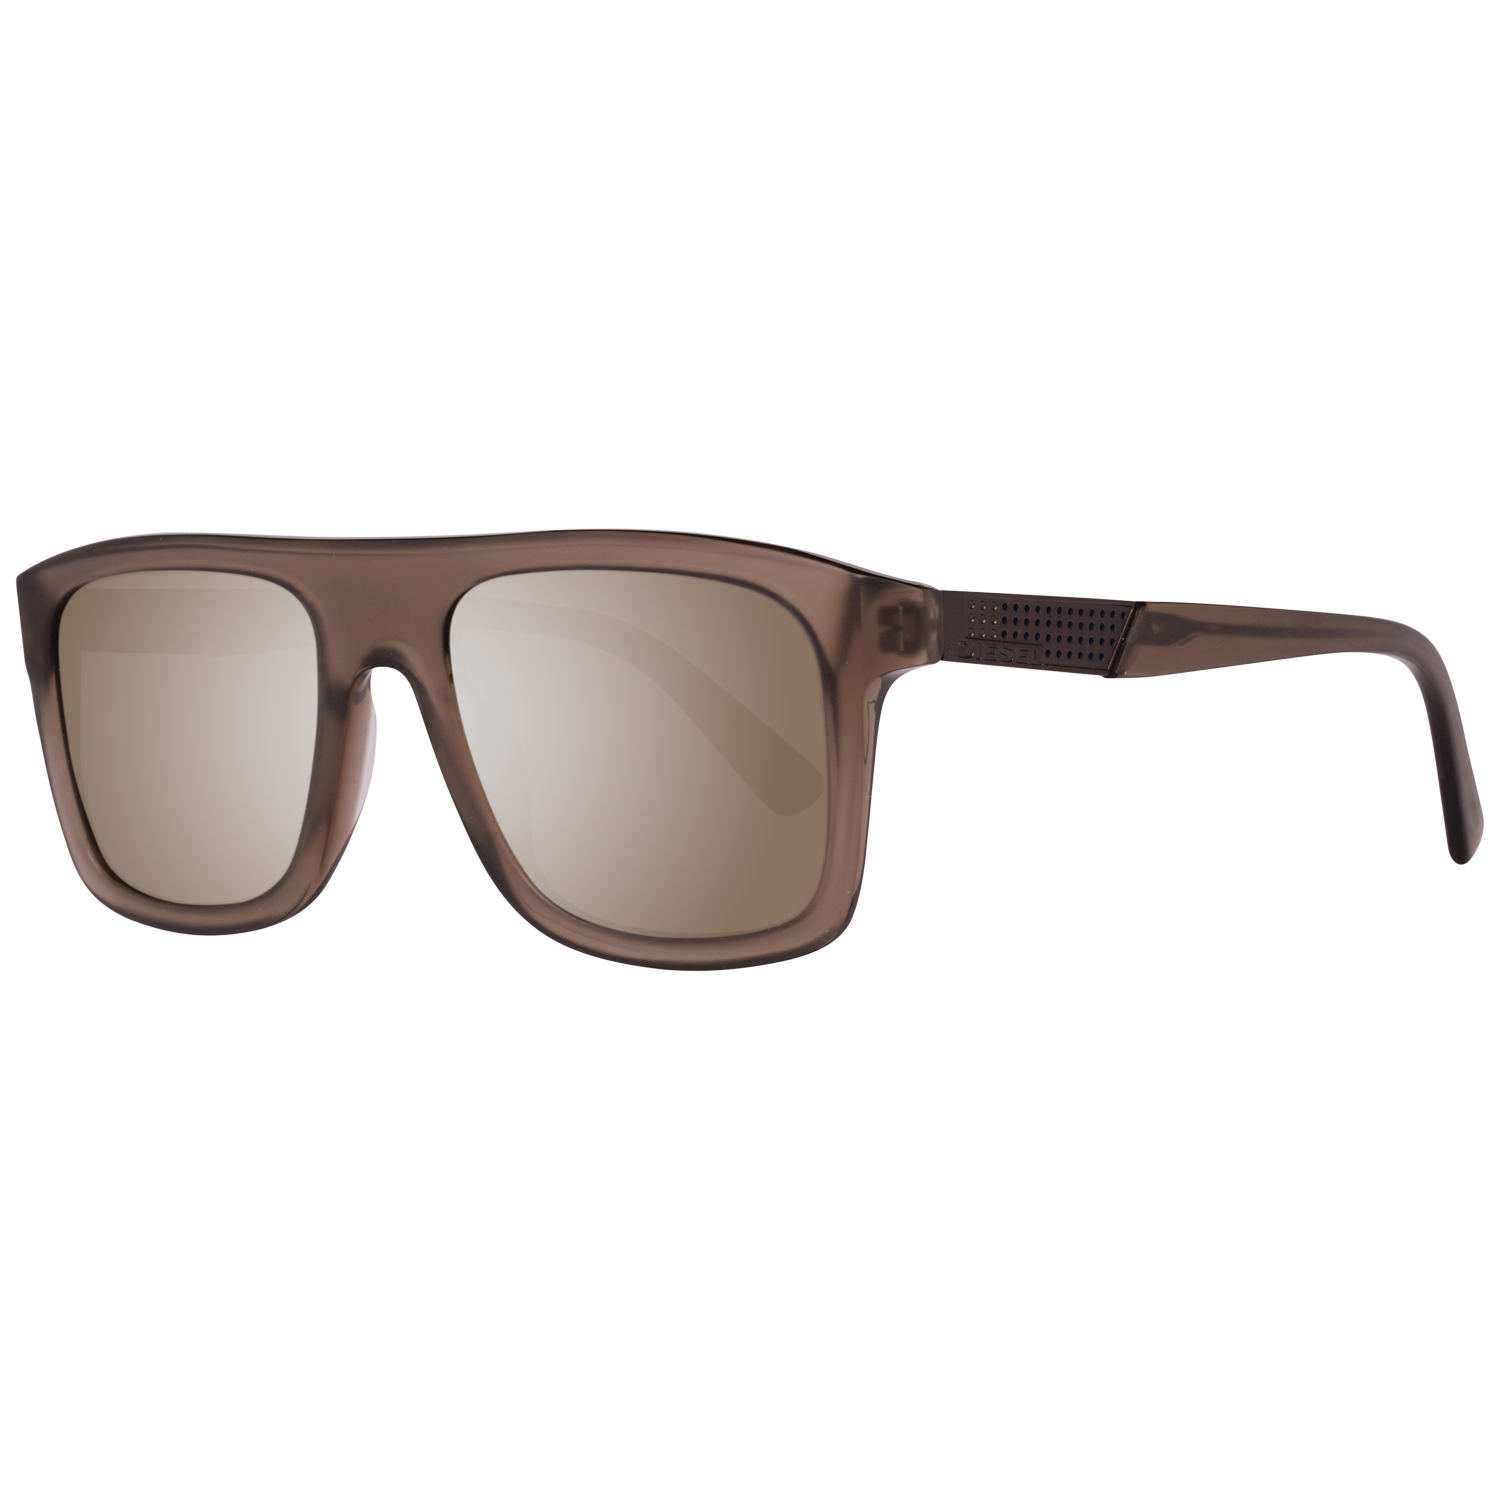 Diesel Sunglasses DL0268 45C 52